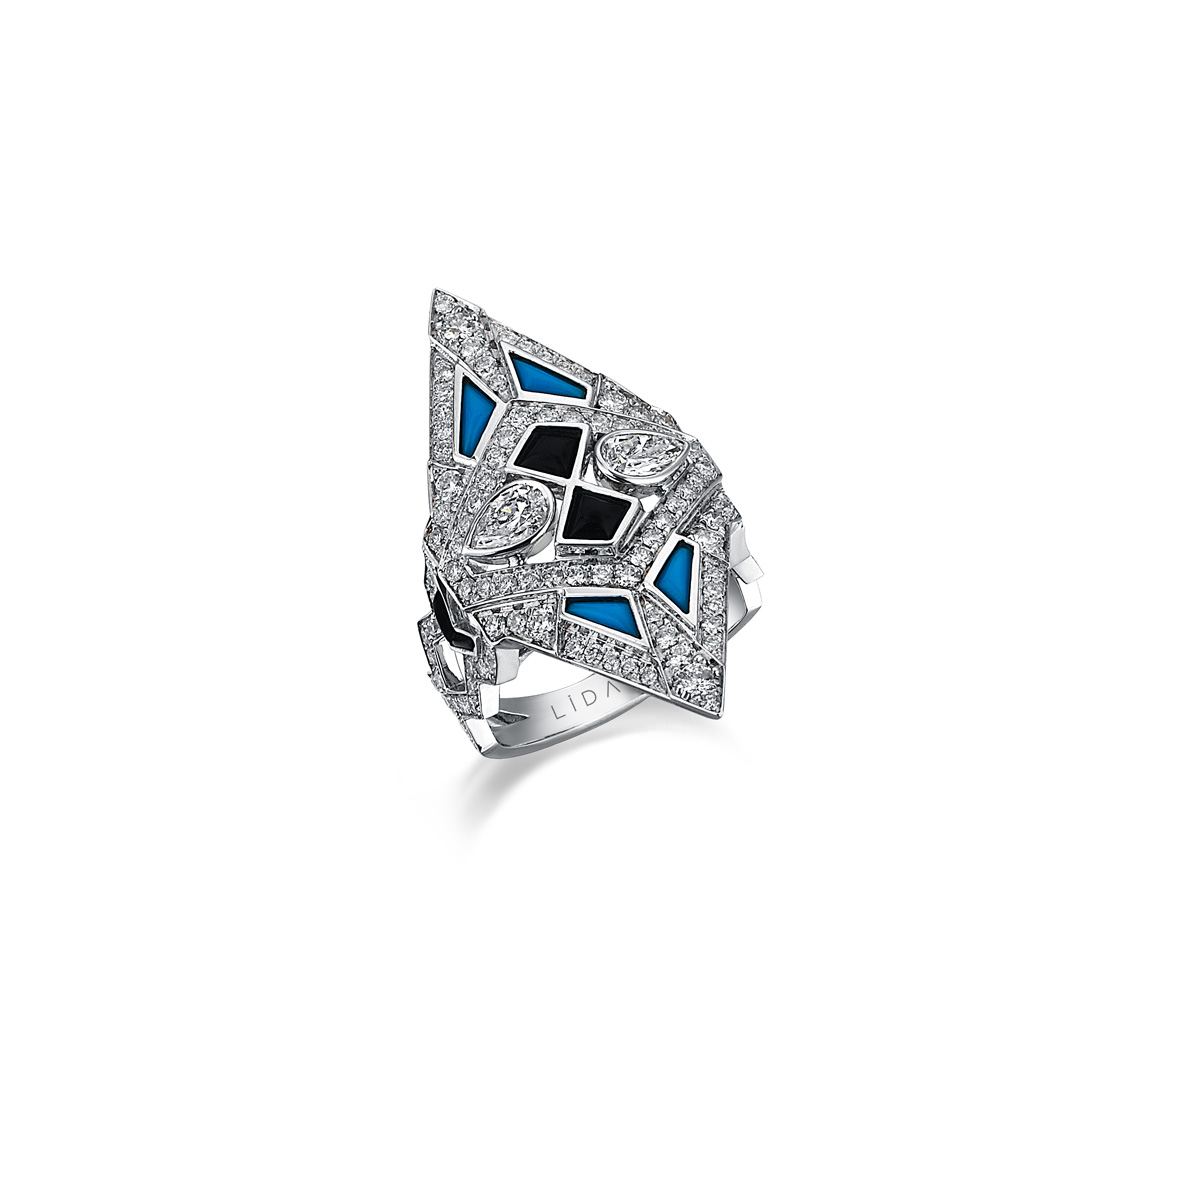 1.23 ct Diamond Ring